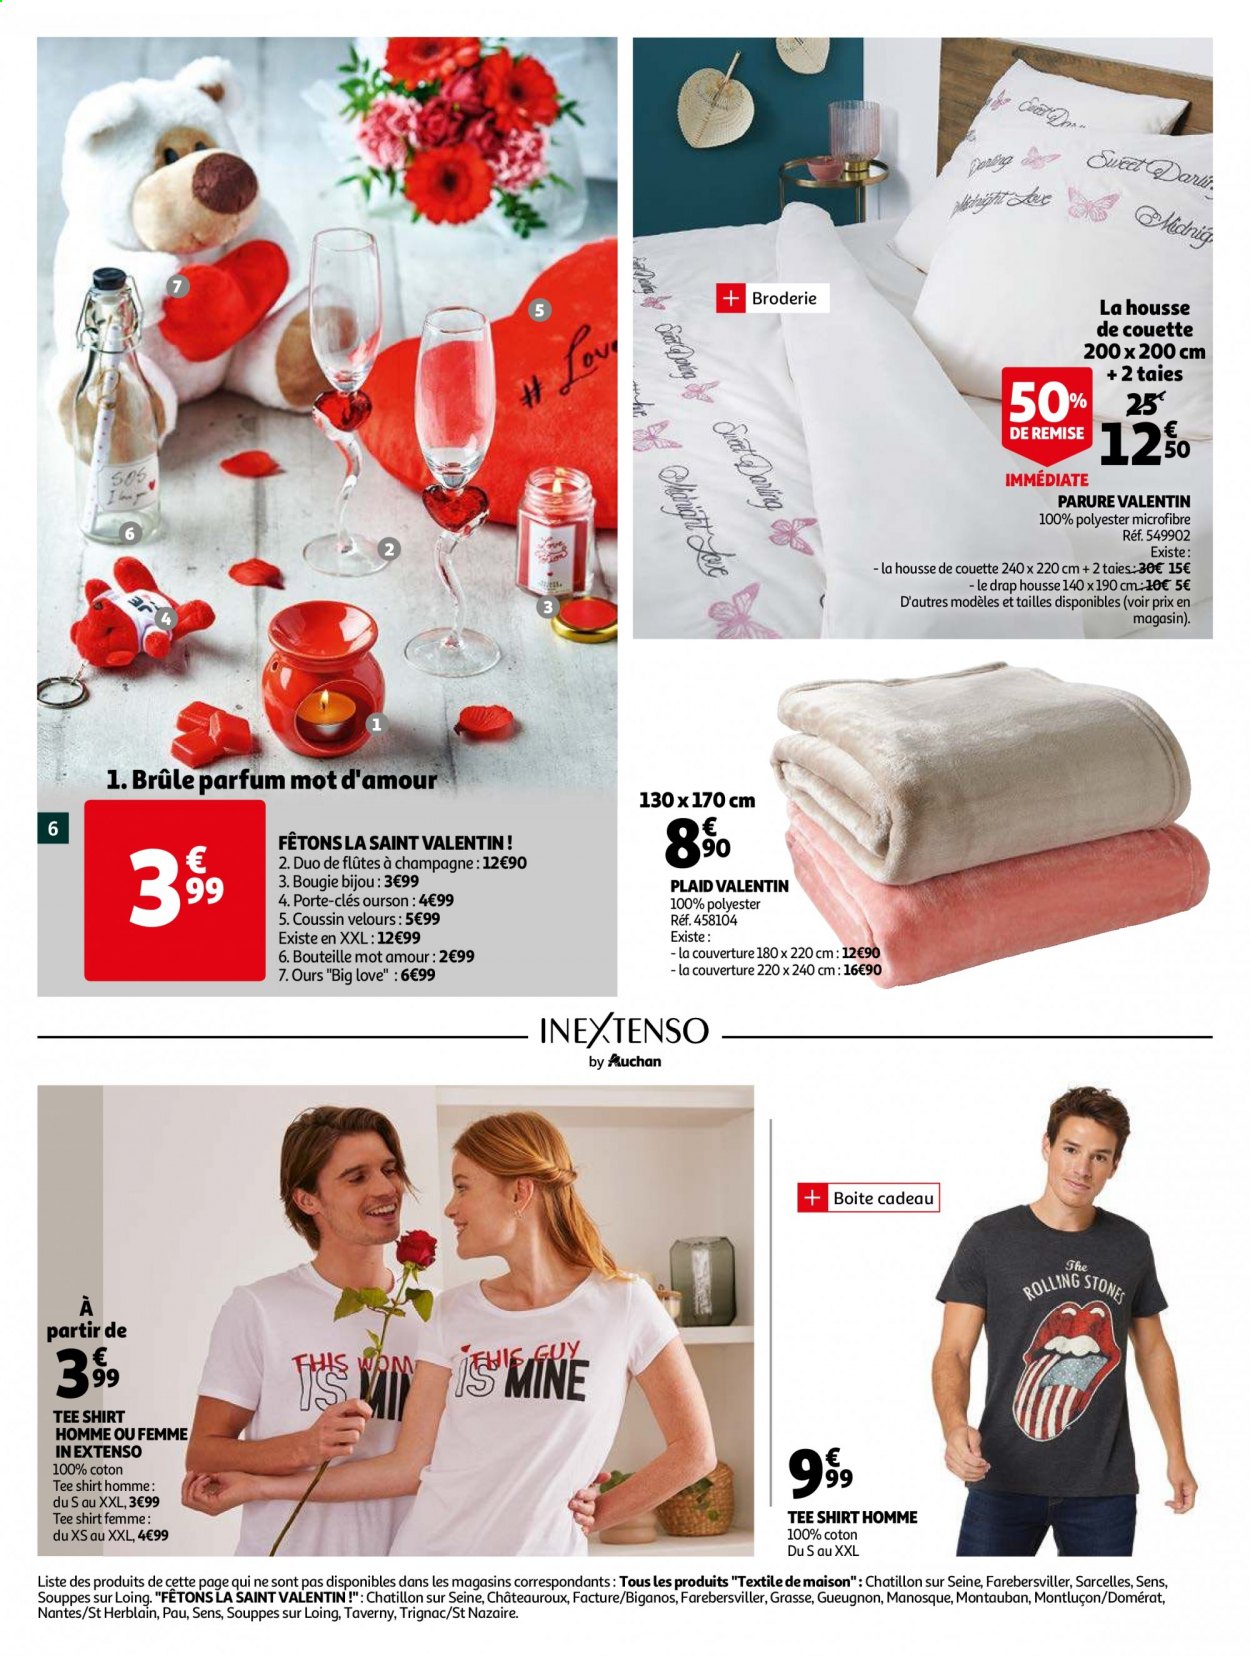 Catalogue Auchan - 09.02.2021 - 14.02.2021. 